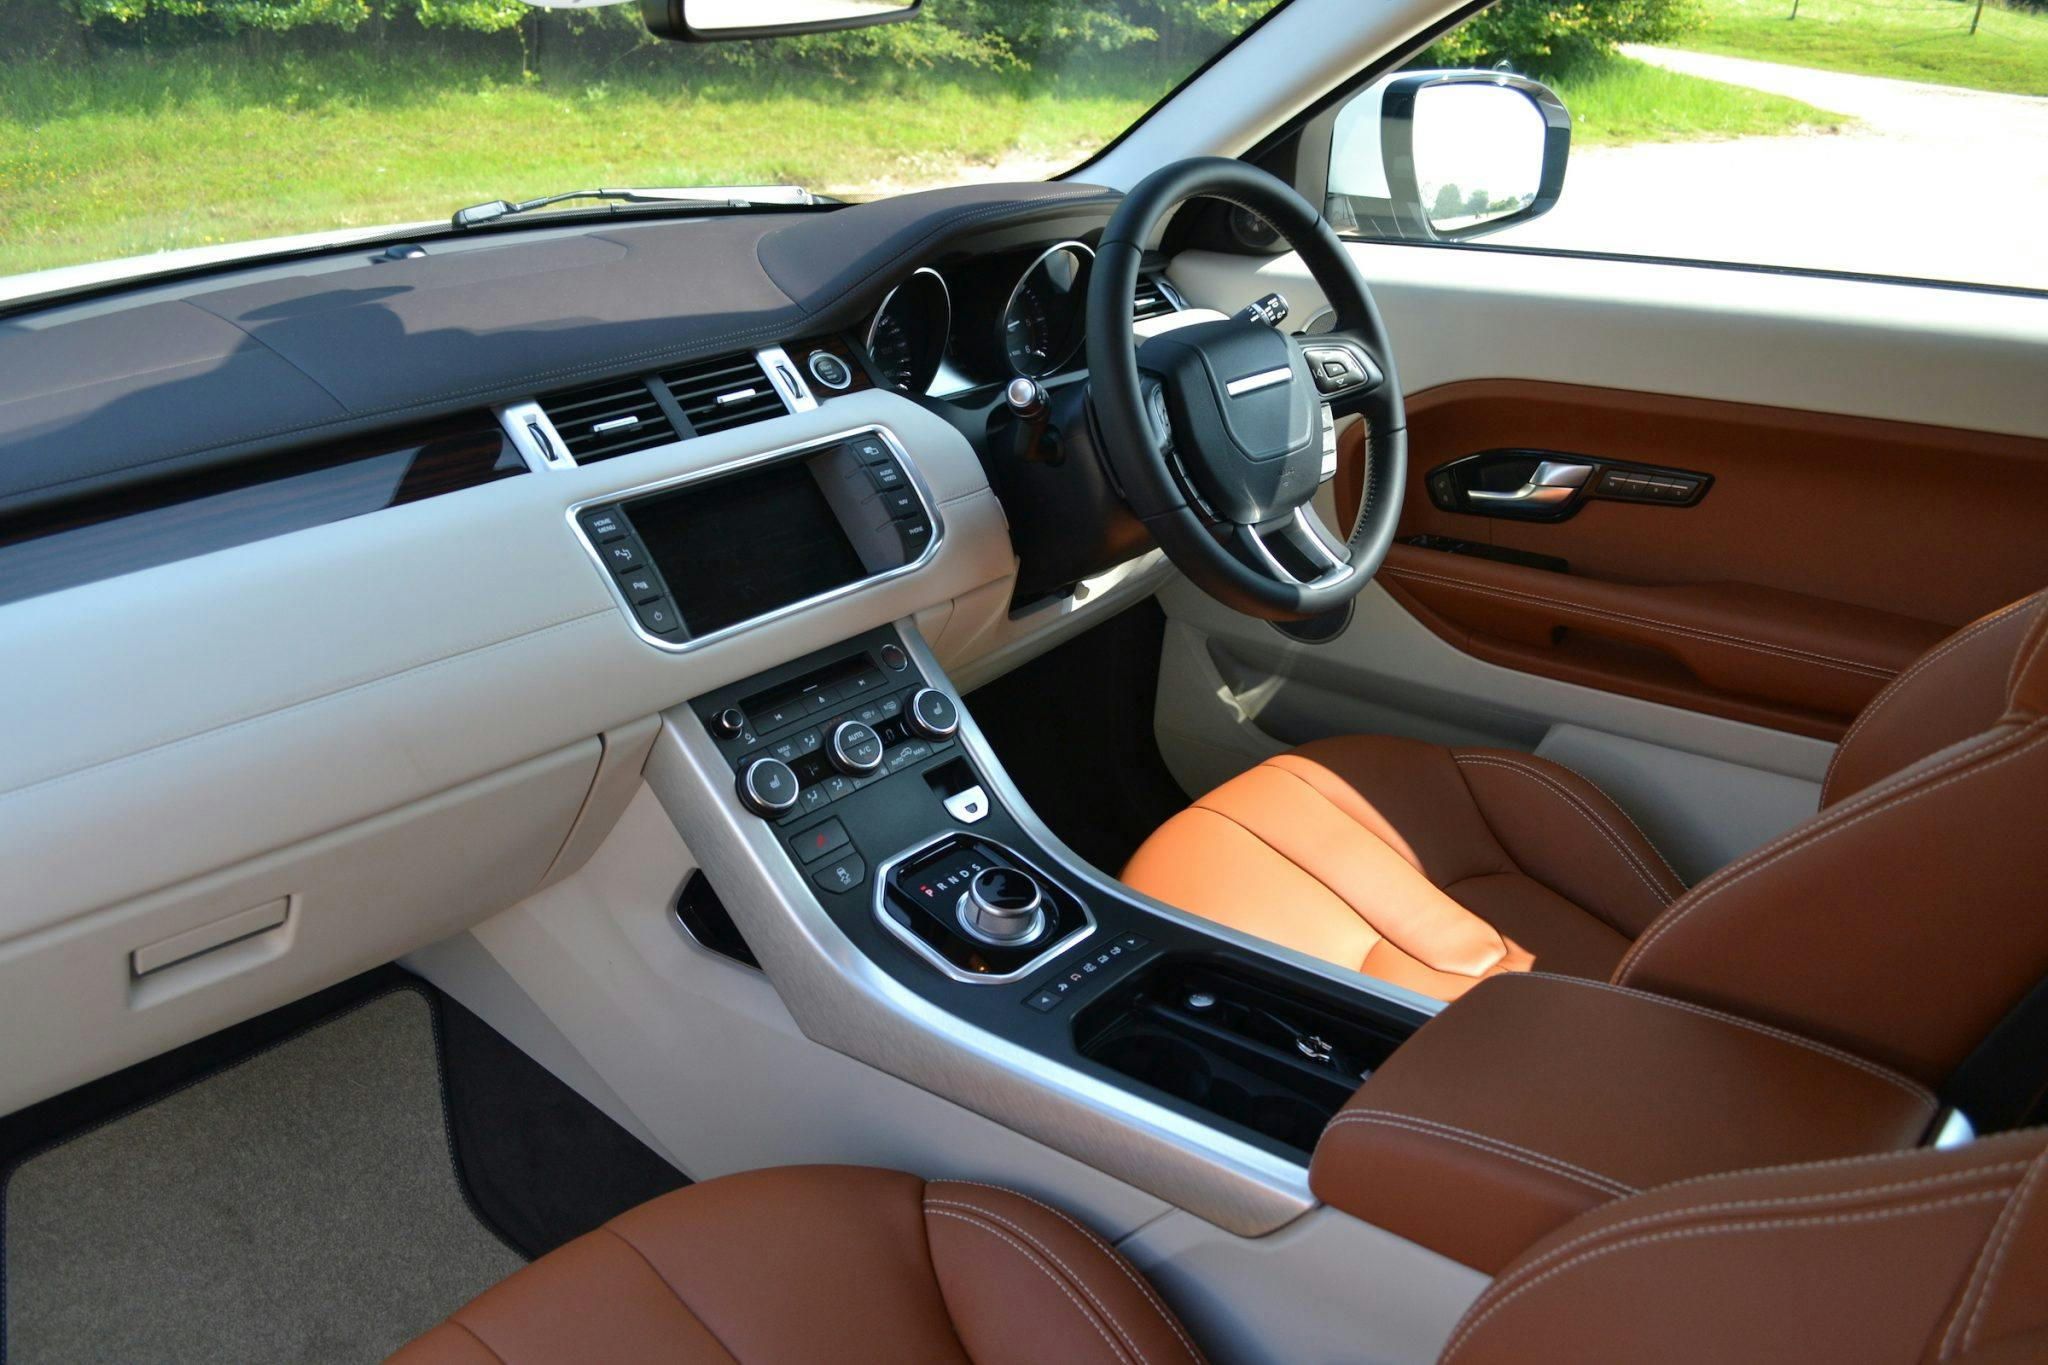 Range Rover Evoque interior front angle